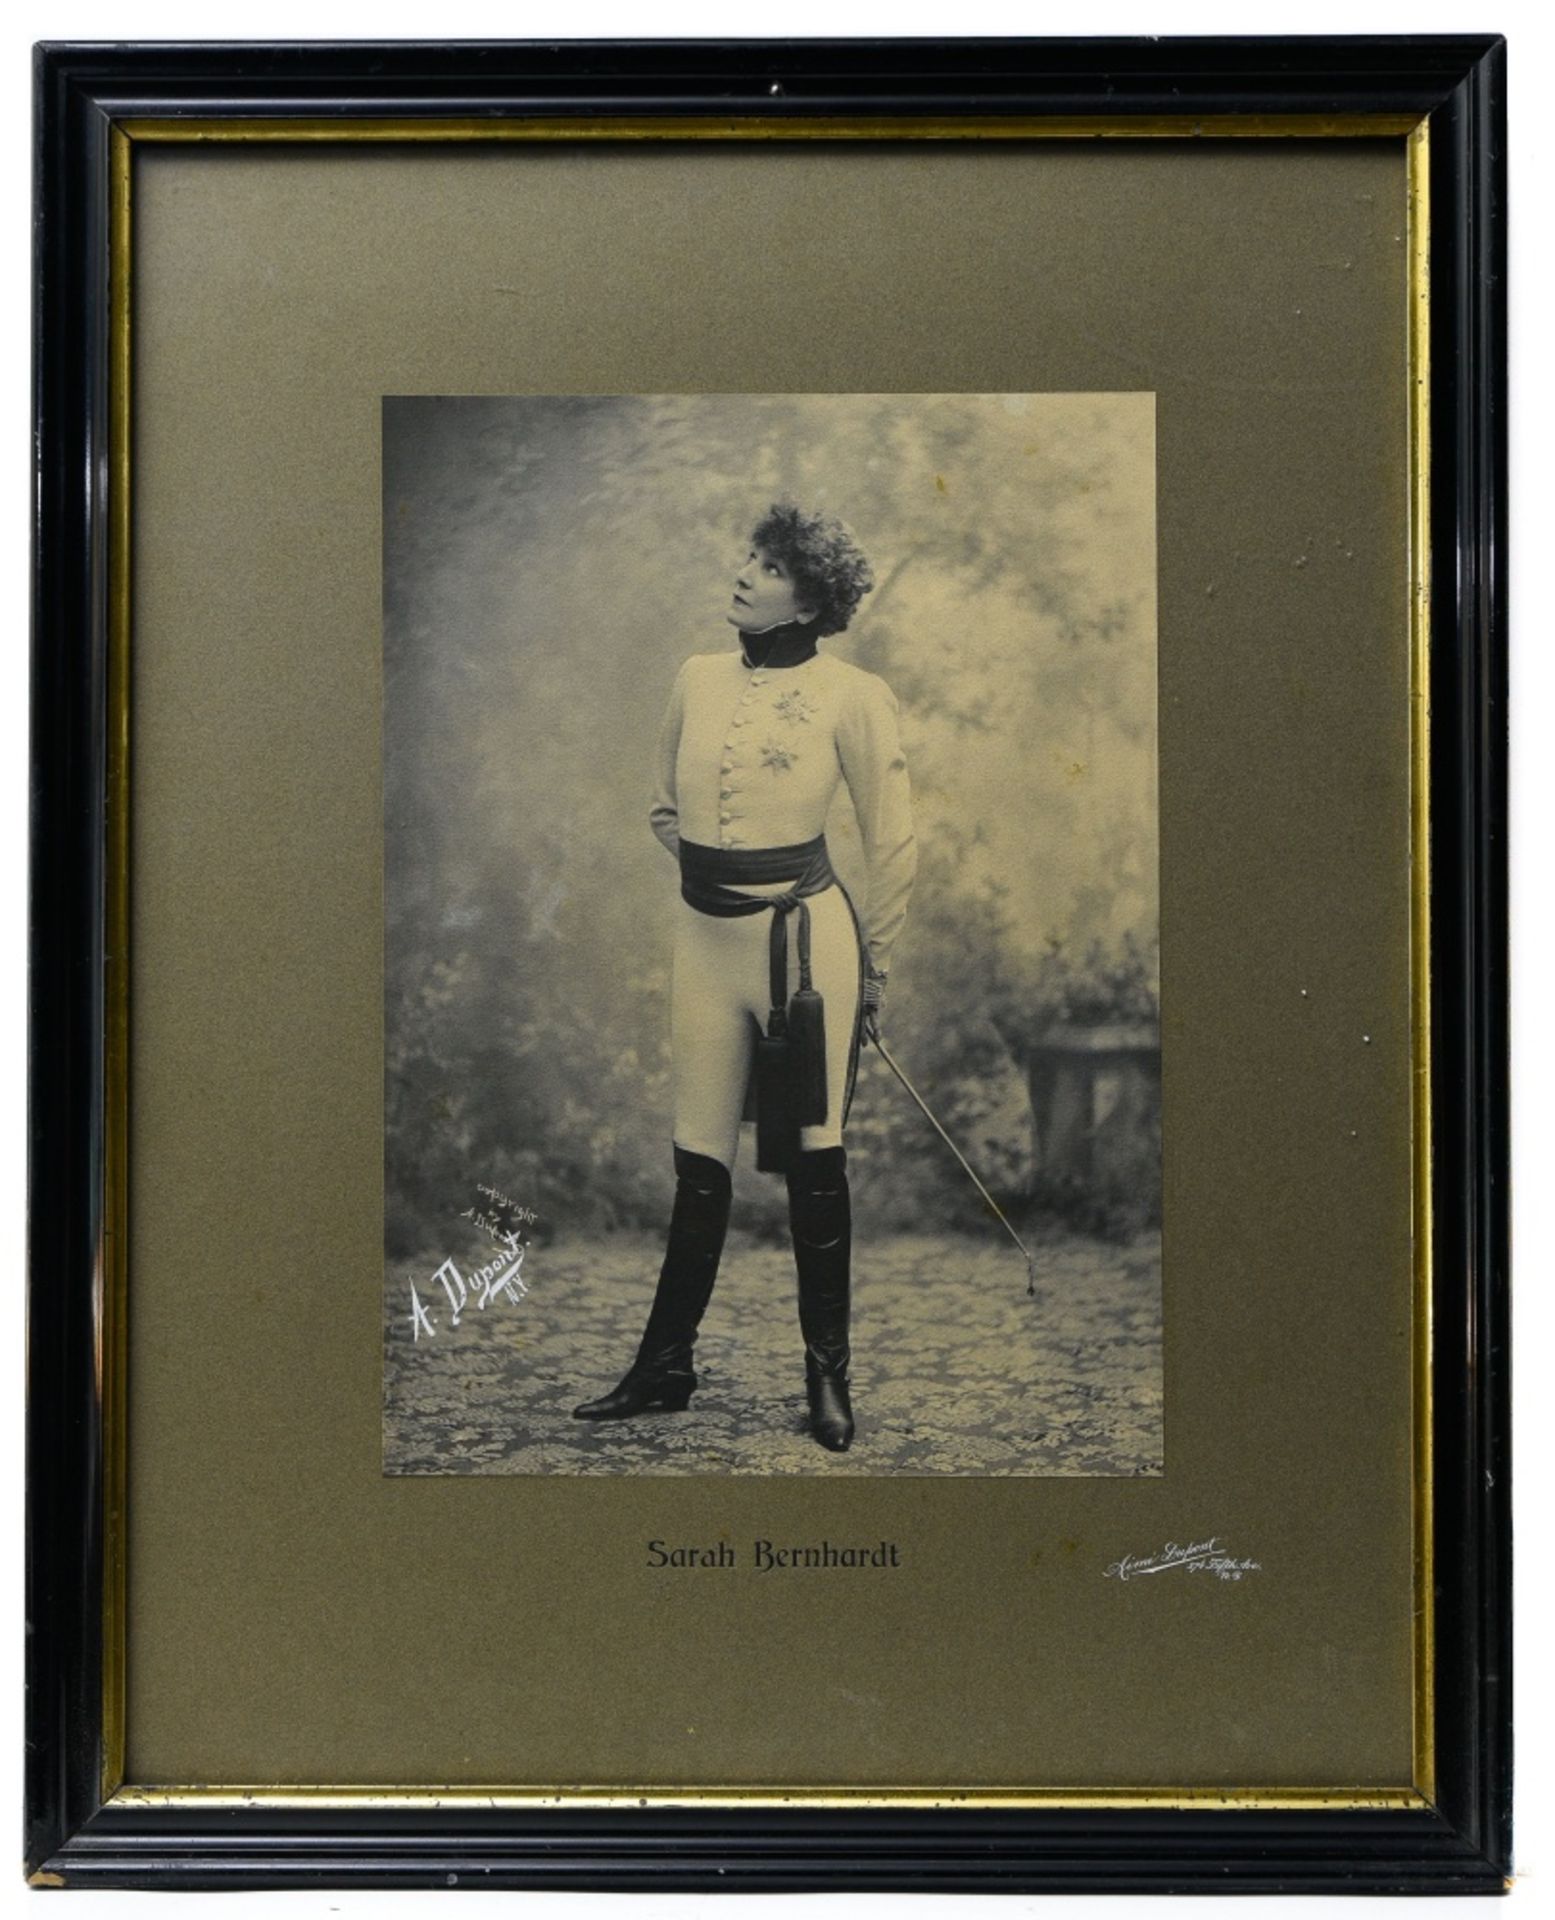 AimŽ DUPONT (1842-1900) Sarah Bernhardt in l'Aiglon, 1900, Print on albumen. Signed A. Dumont N. - Image 2 of 3